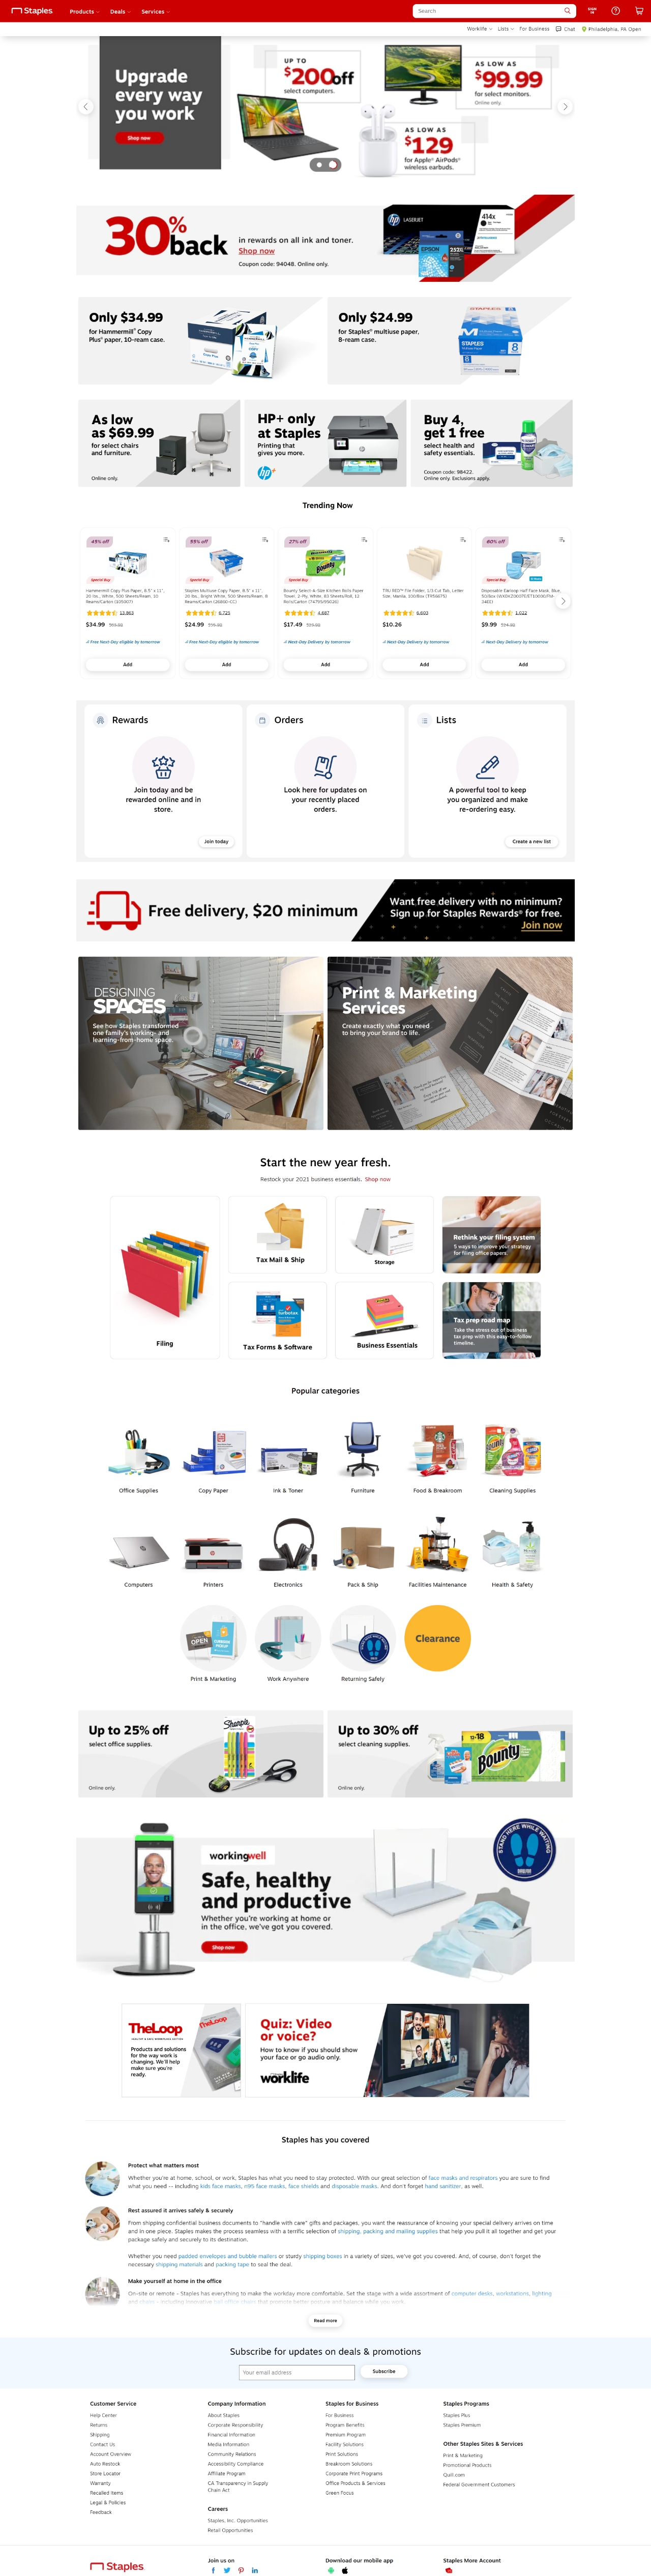 staples home page desktop